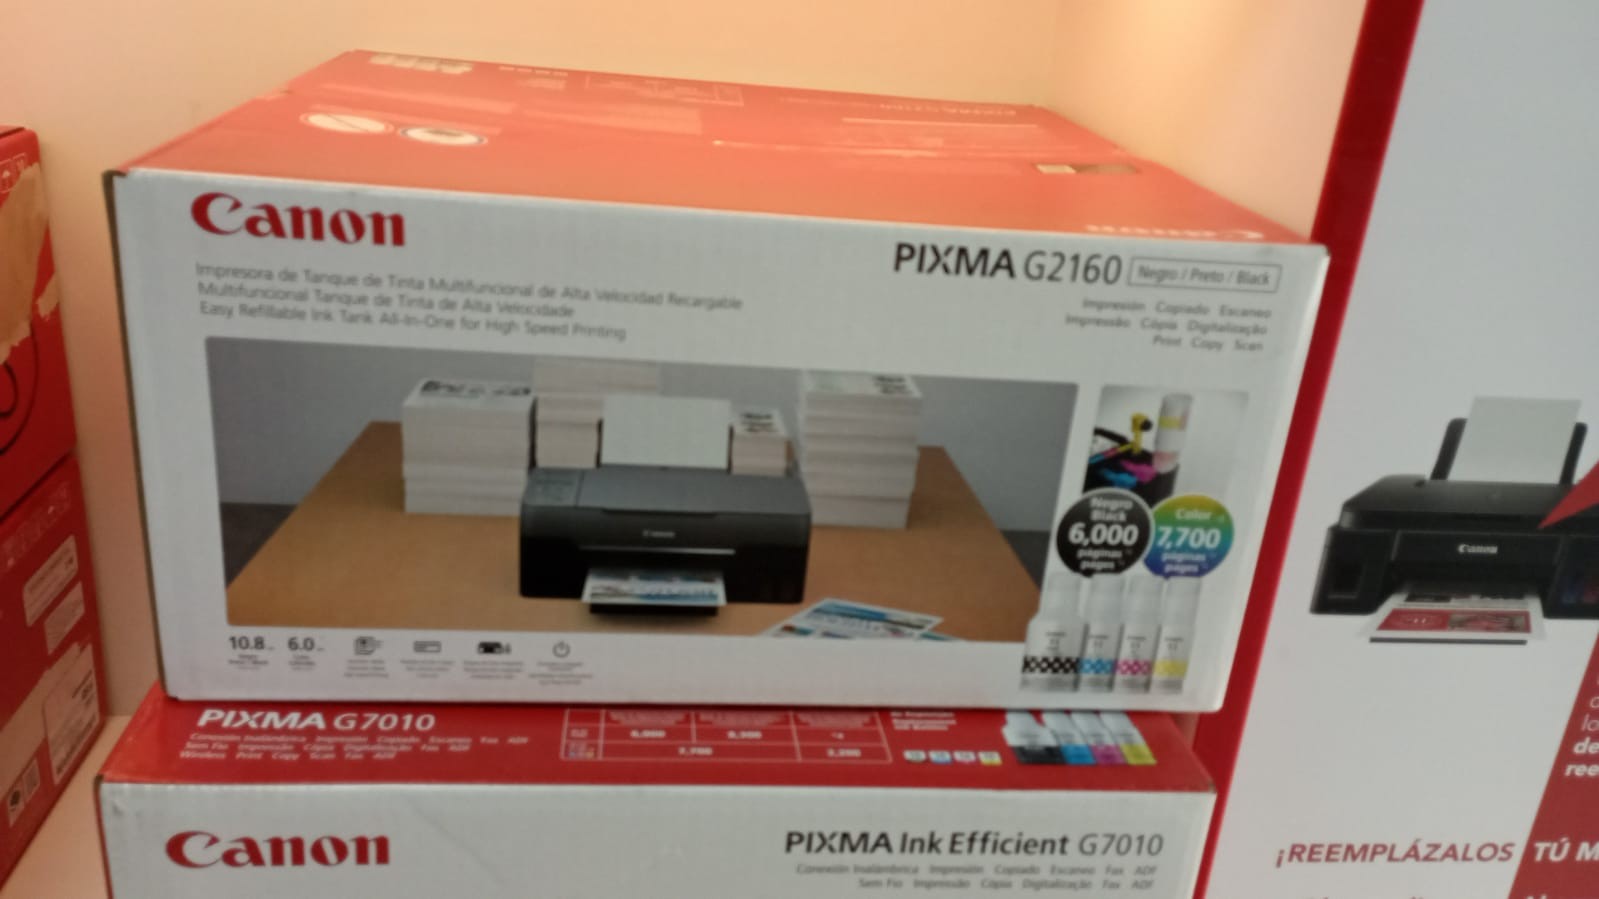 impresoras y scanners - IMPRESORA CANON PIXMA G2160 MULTIFUNCIONAL  0